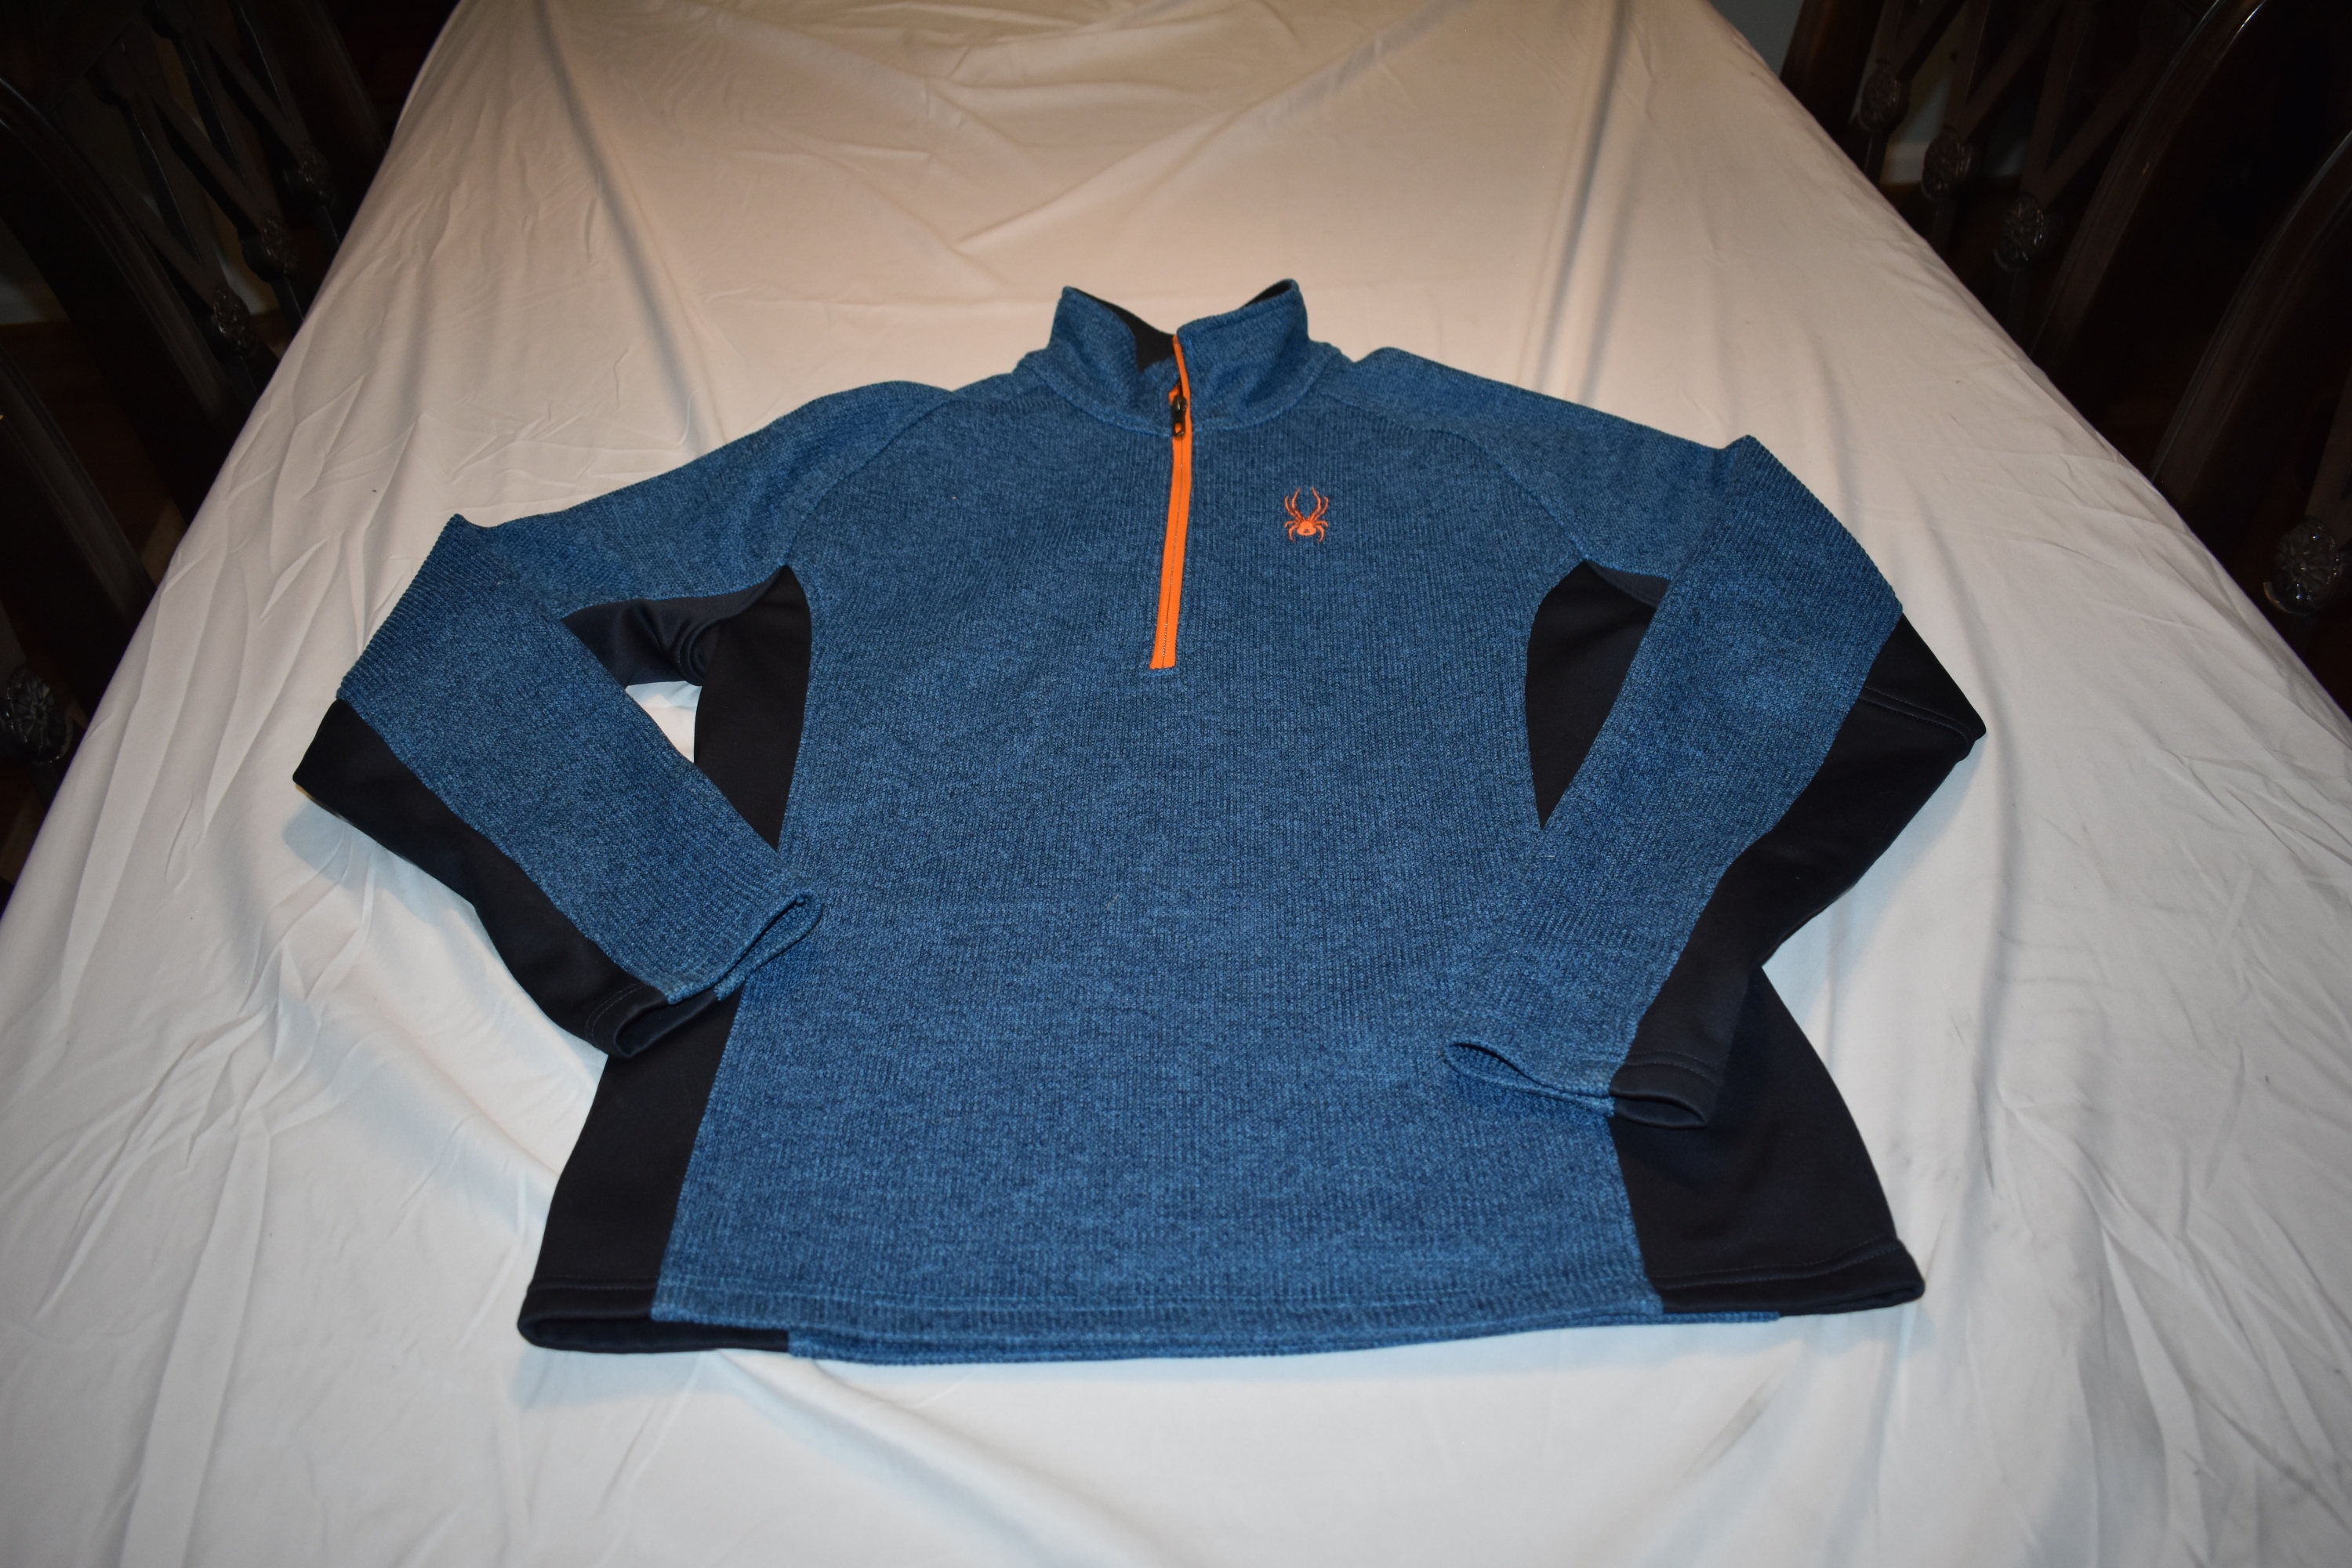 Spyder Half-Zip Sweatshirt, Blue/Black/Orange, Medium - Top Condition!